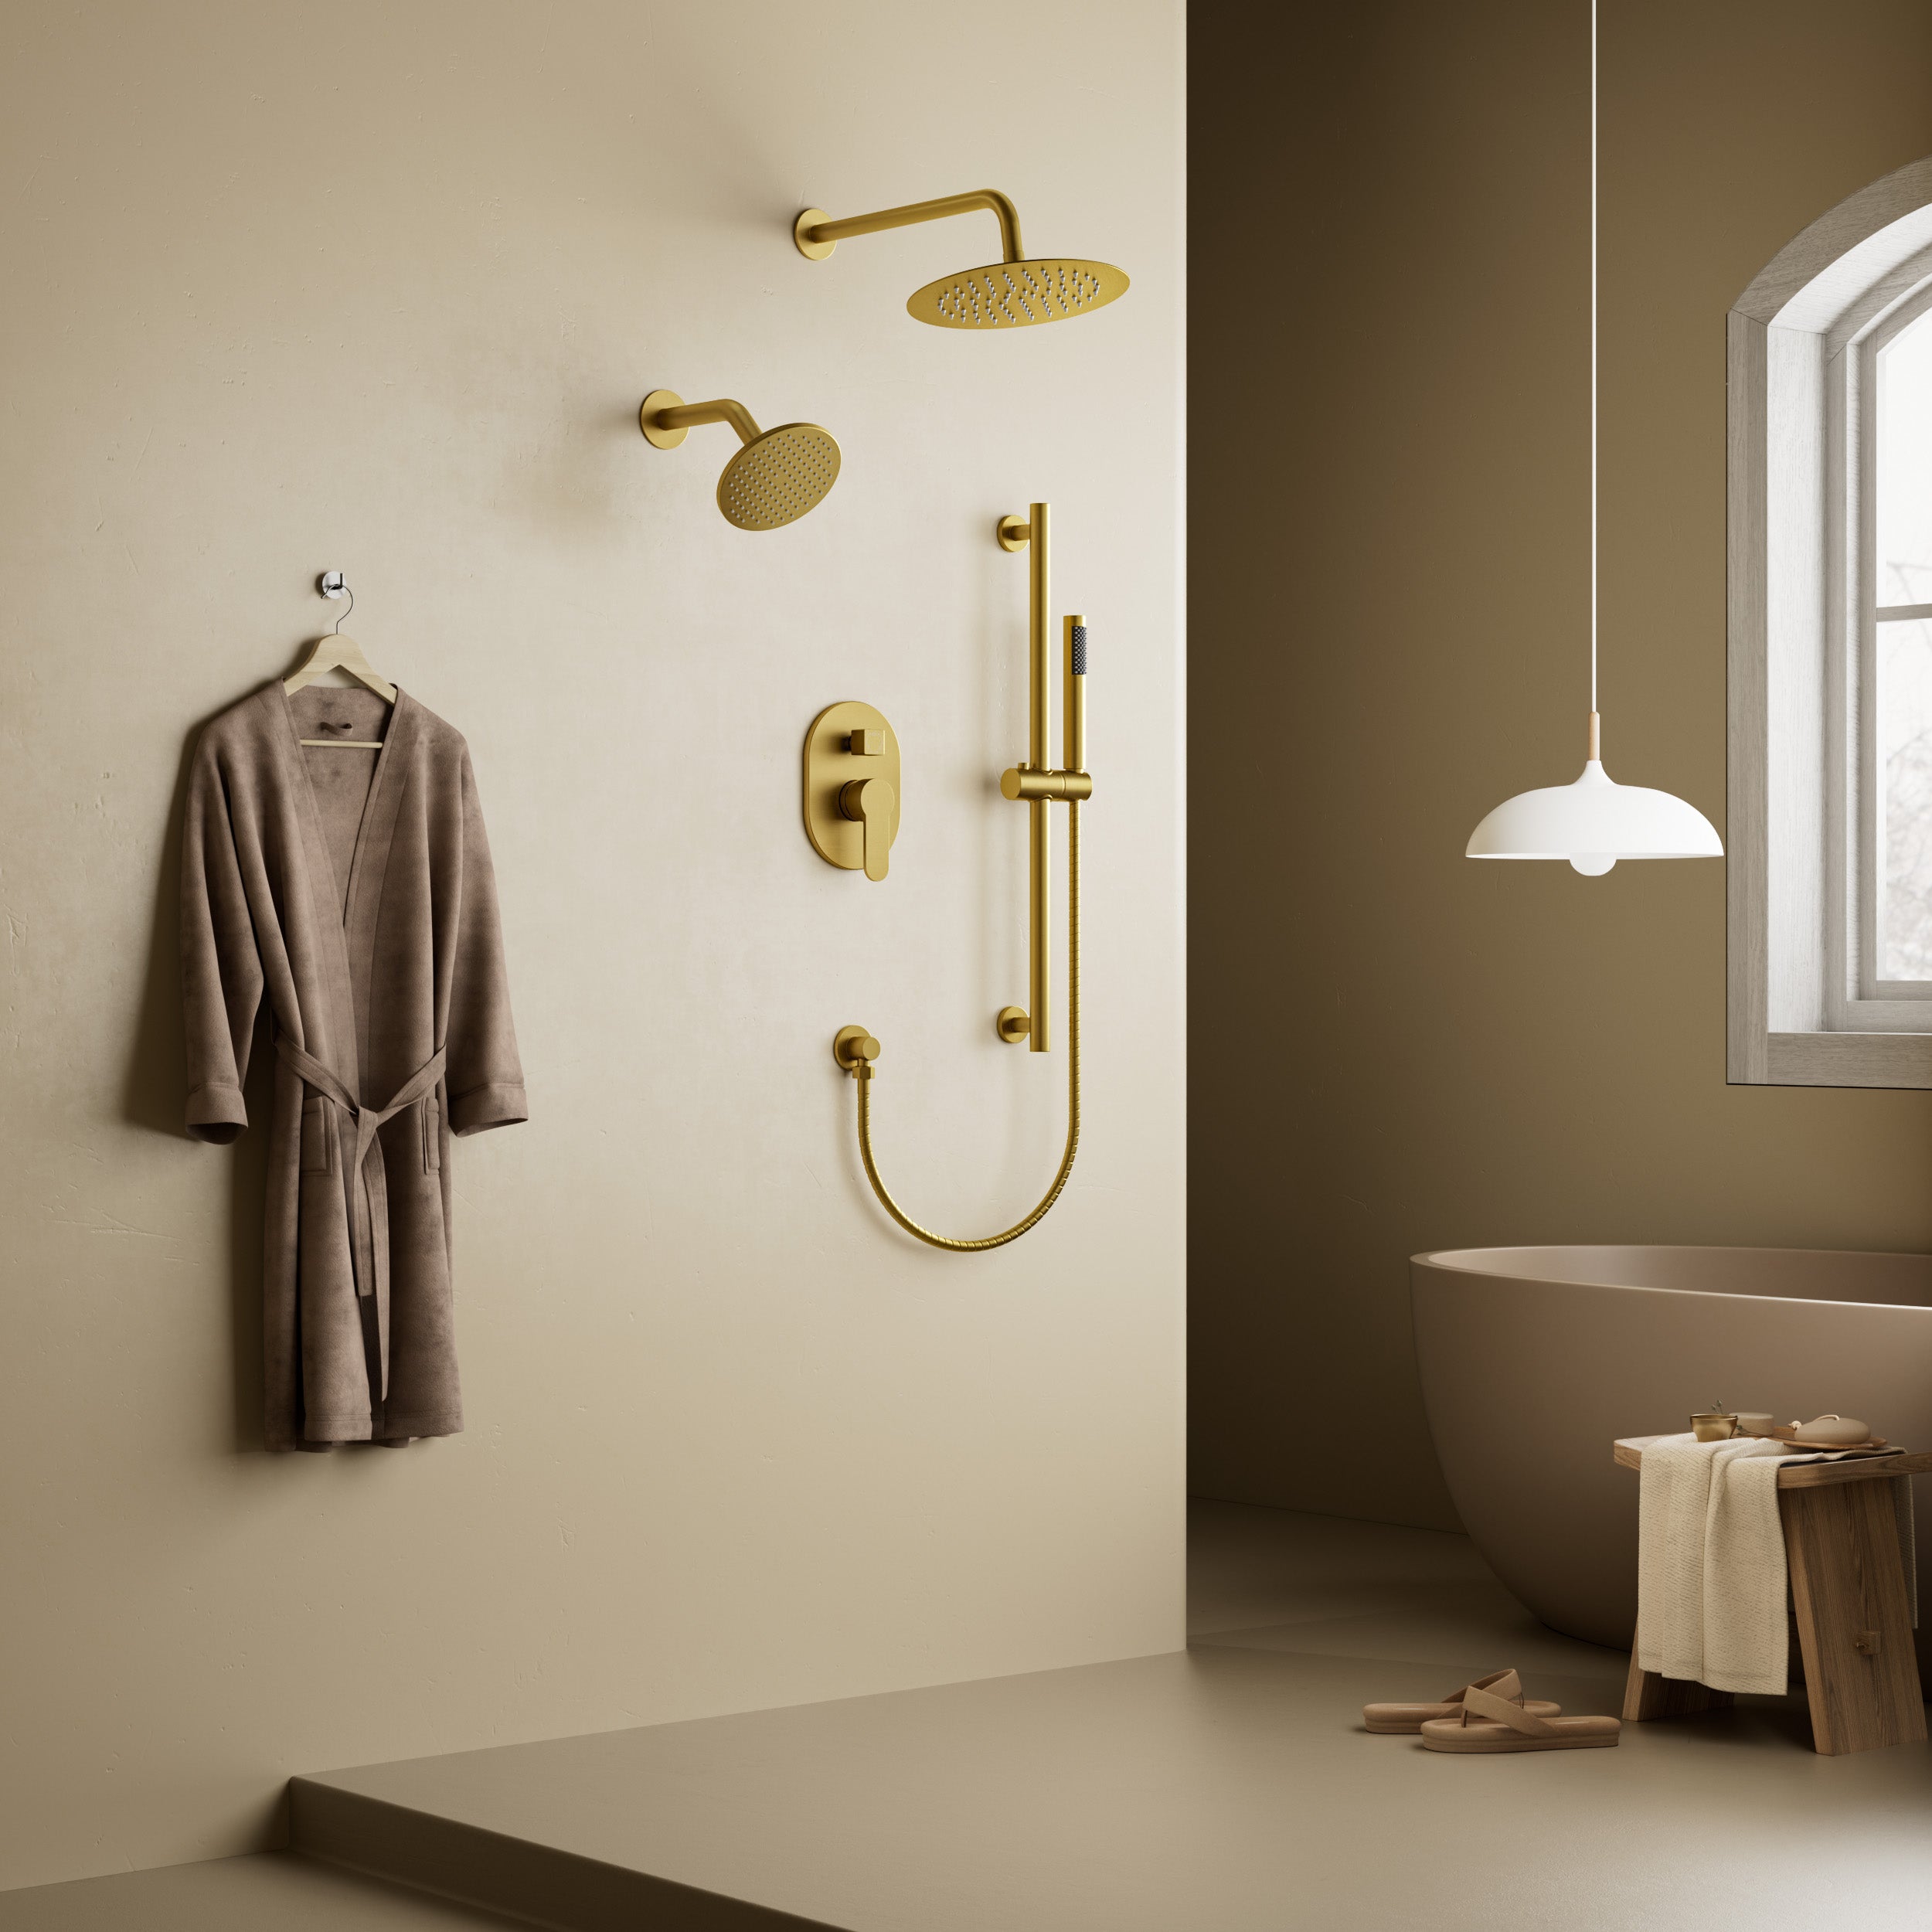 EVERSTEIN Luxury Dual Shower Heads System: Brushed Gold 10" High-Pressure Showerhead, Handheld Spray with Slide Bar